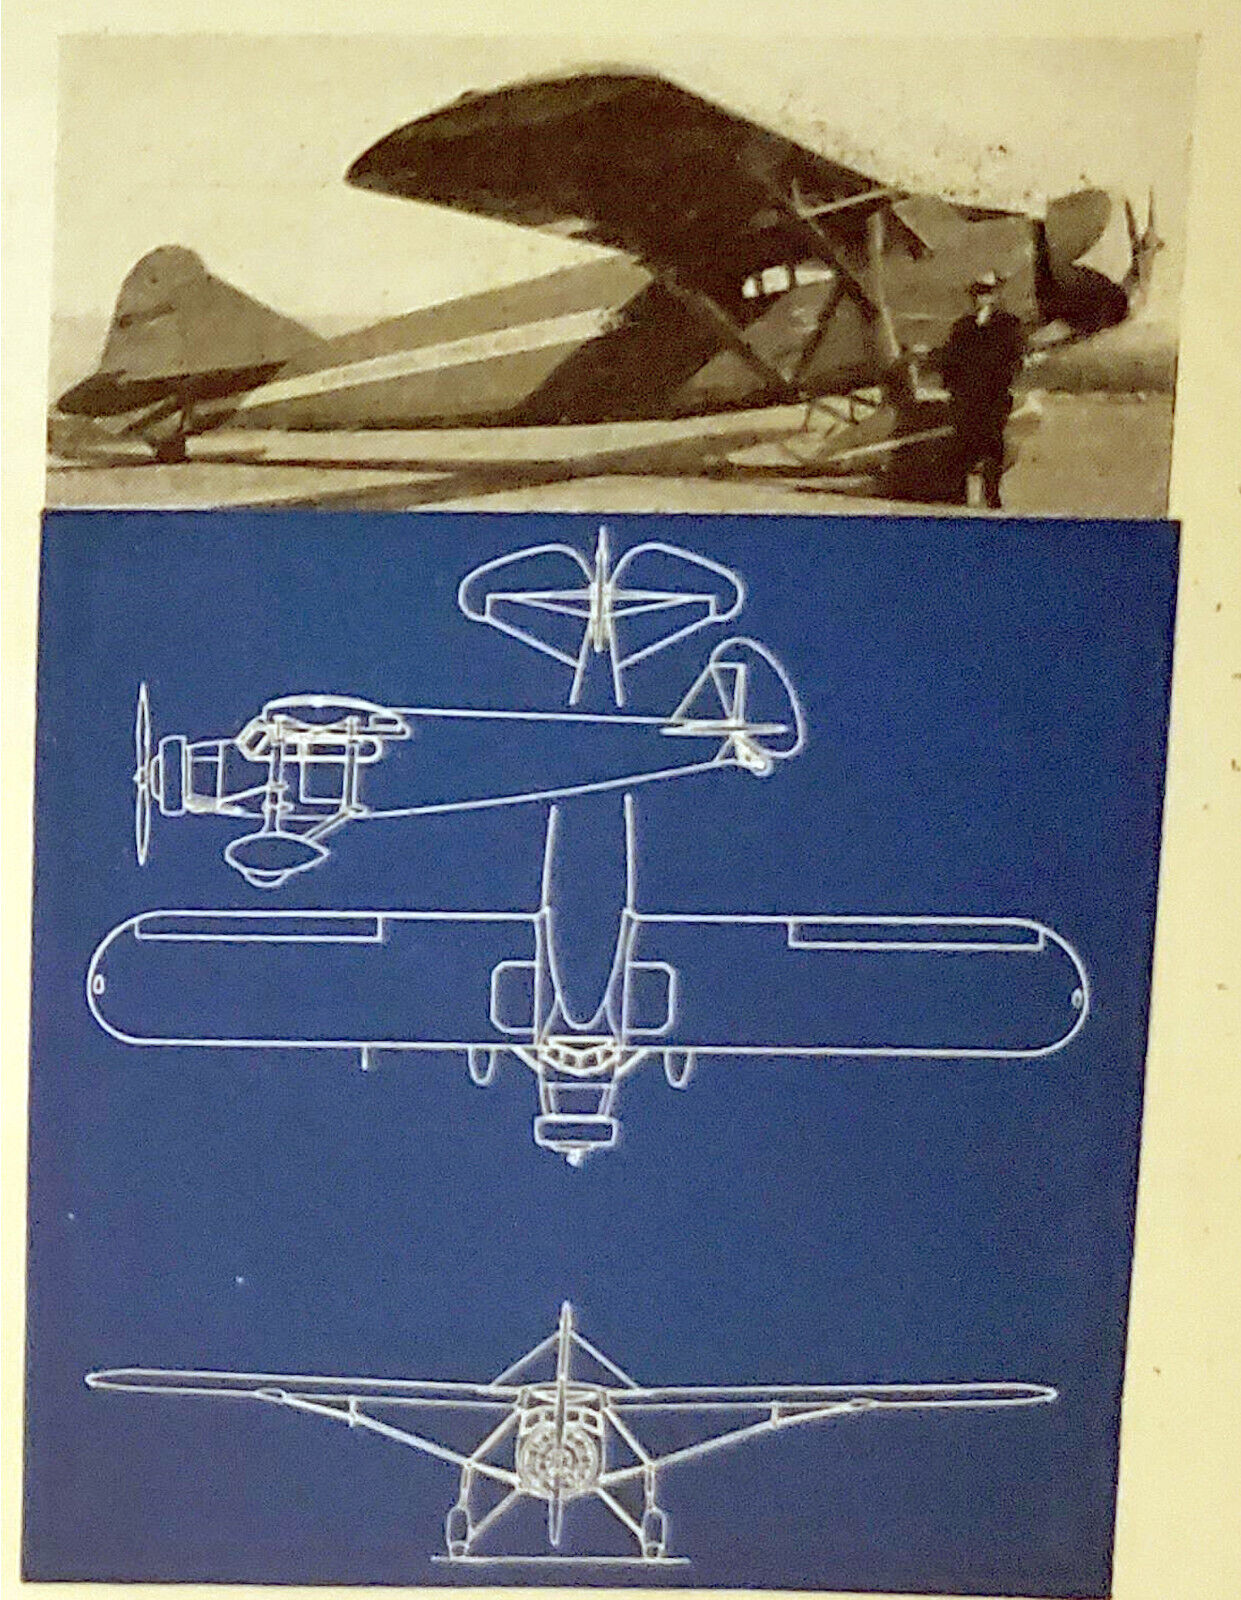 1935 SPARTAN Model C-5-301 Airplane article 1B3-1